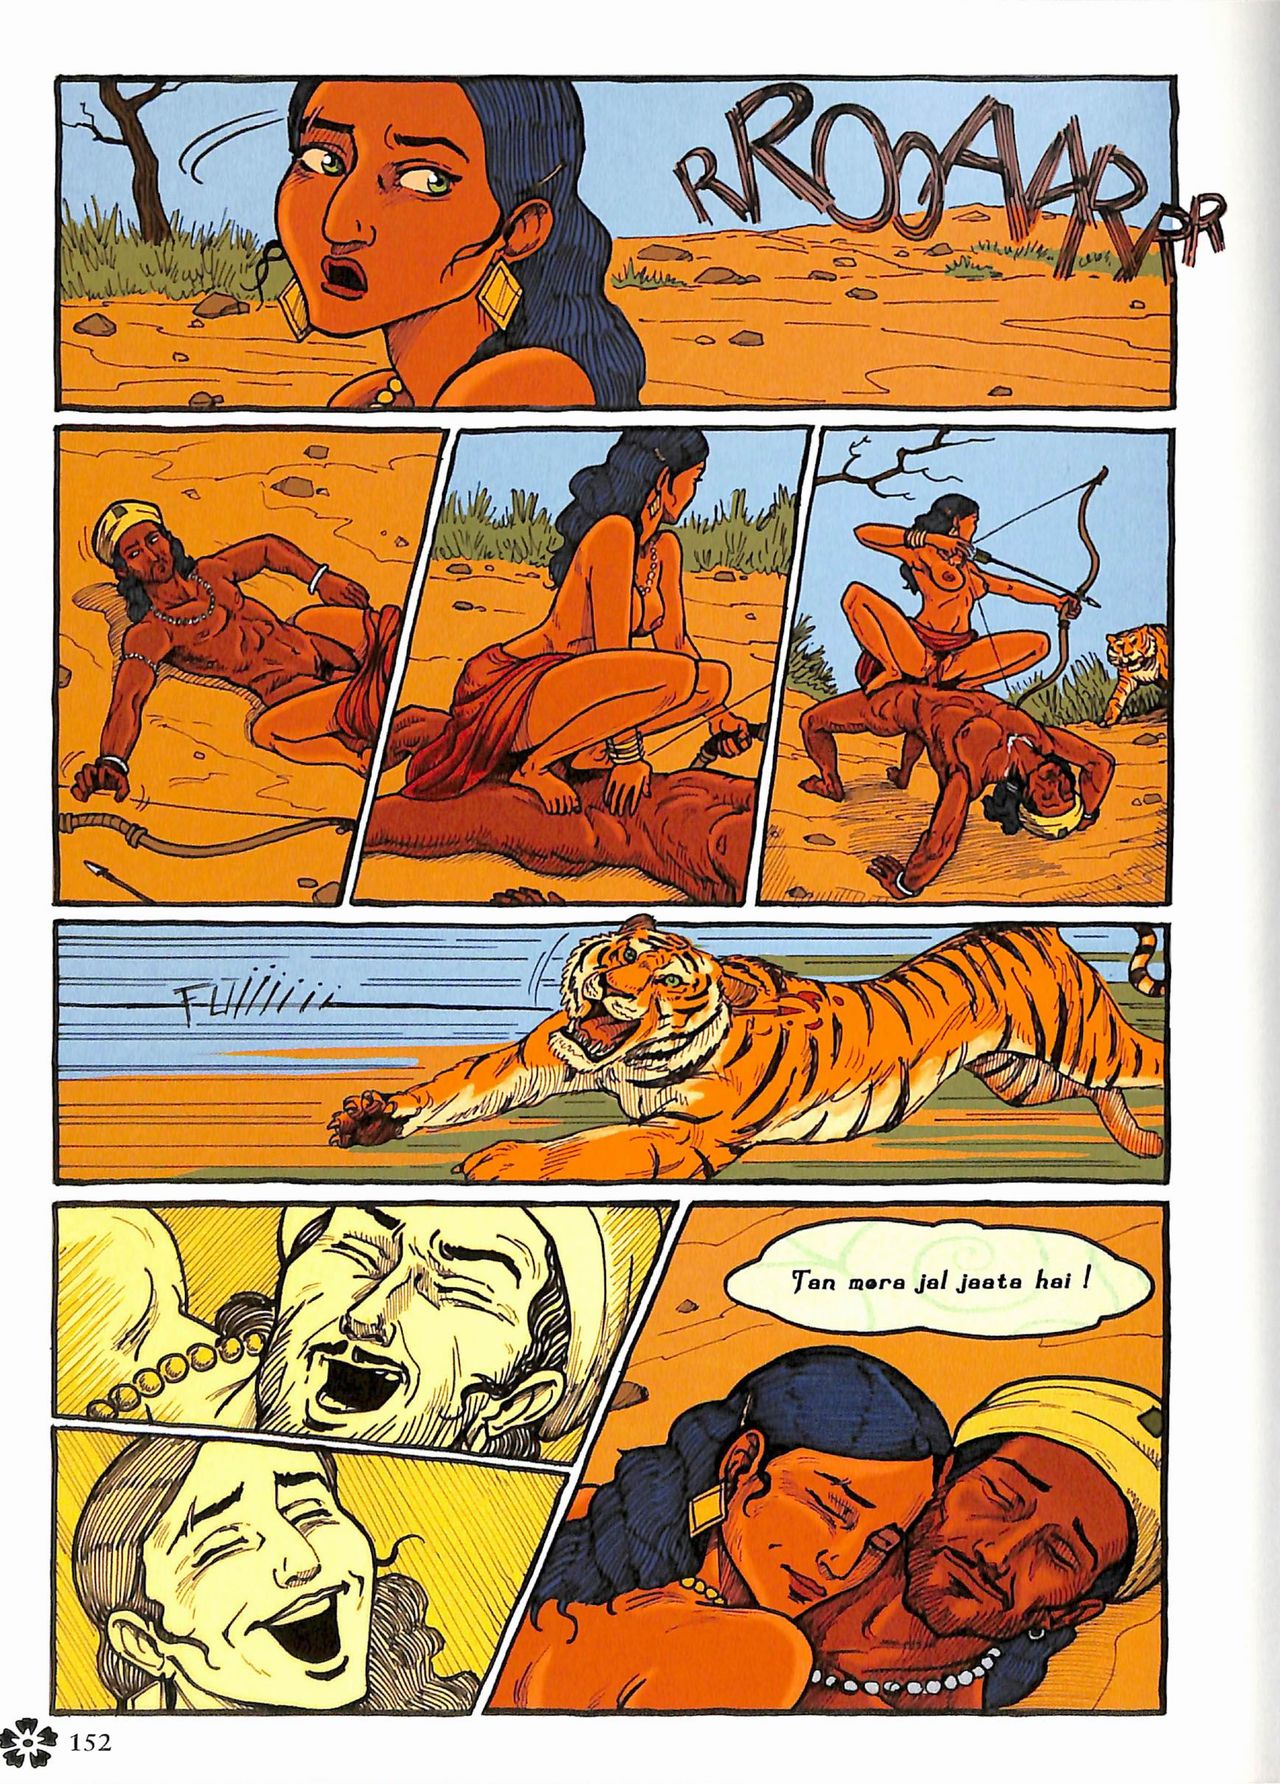 Kama Sutra en bandes dessinées - Kama Sutra with Comics numero d'image 152